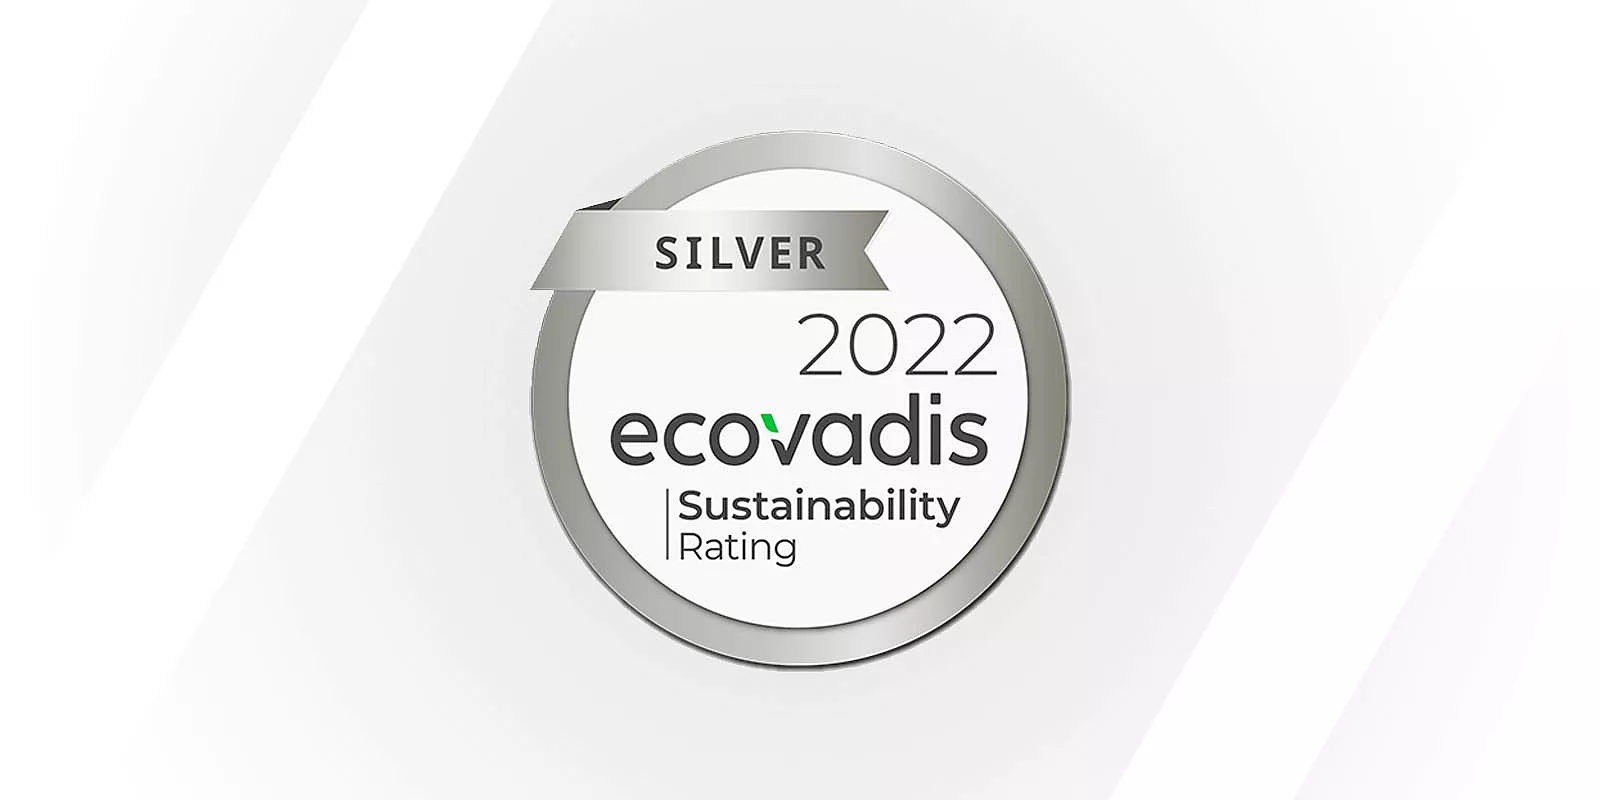 KRAIBURG TPE awarded Silver level in the EcoVadis sustainability rating 2022